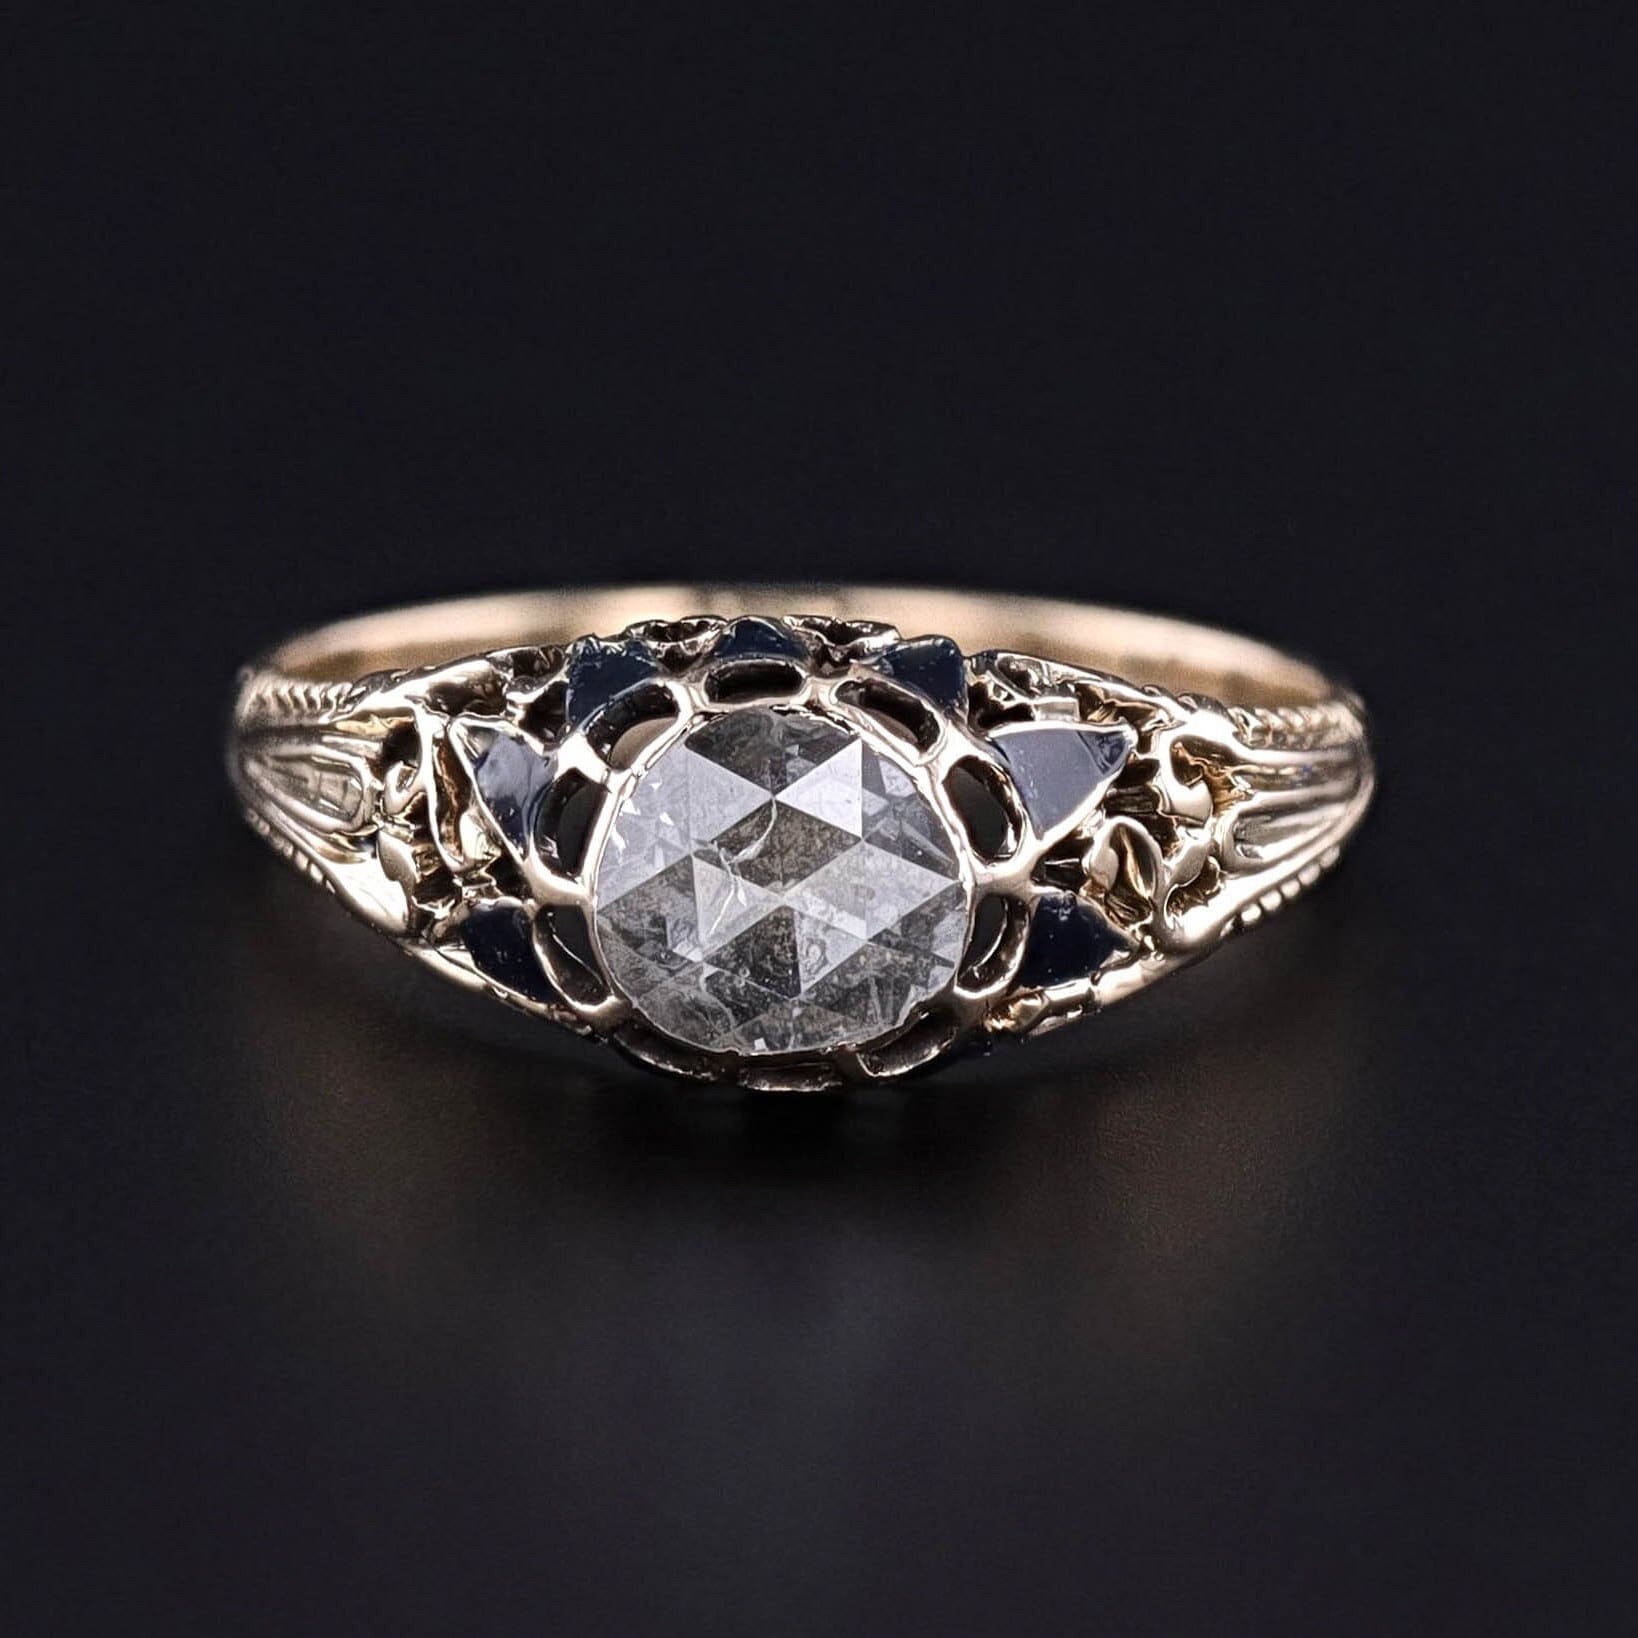 Antique Rose Cut Diamond Ring of 14k Gold